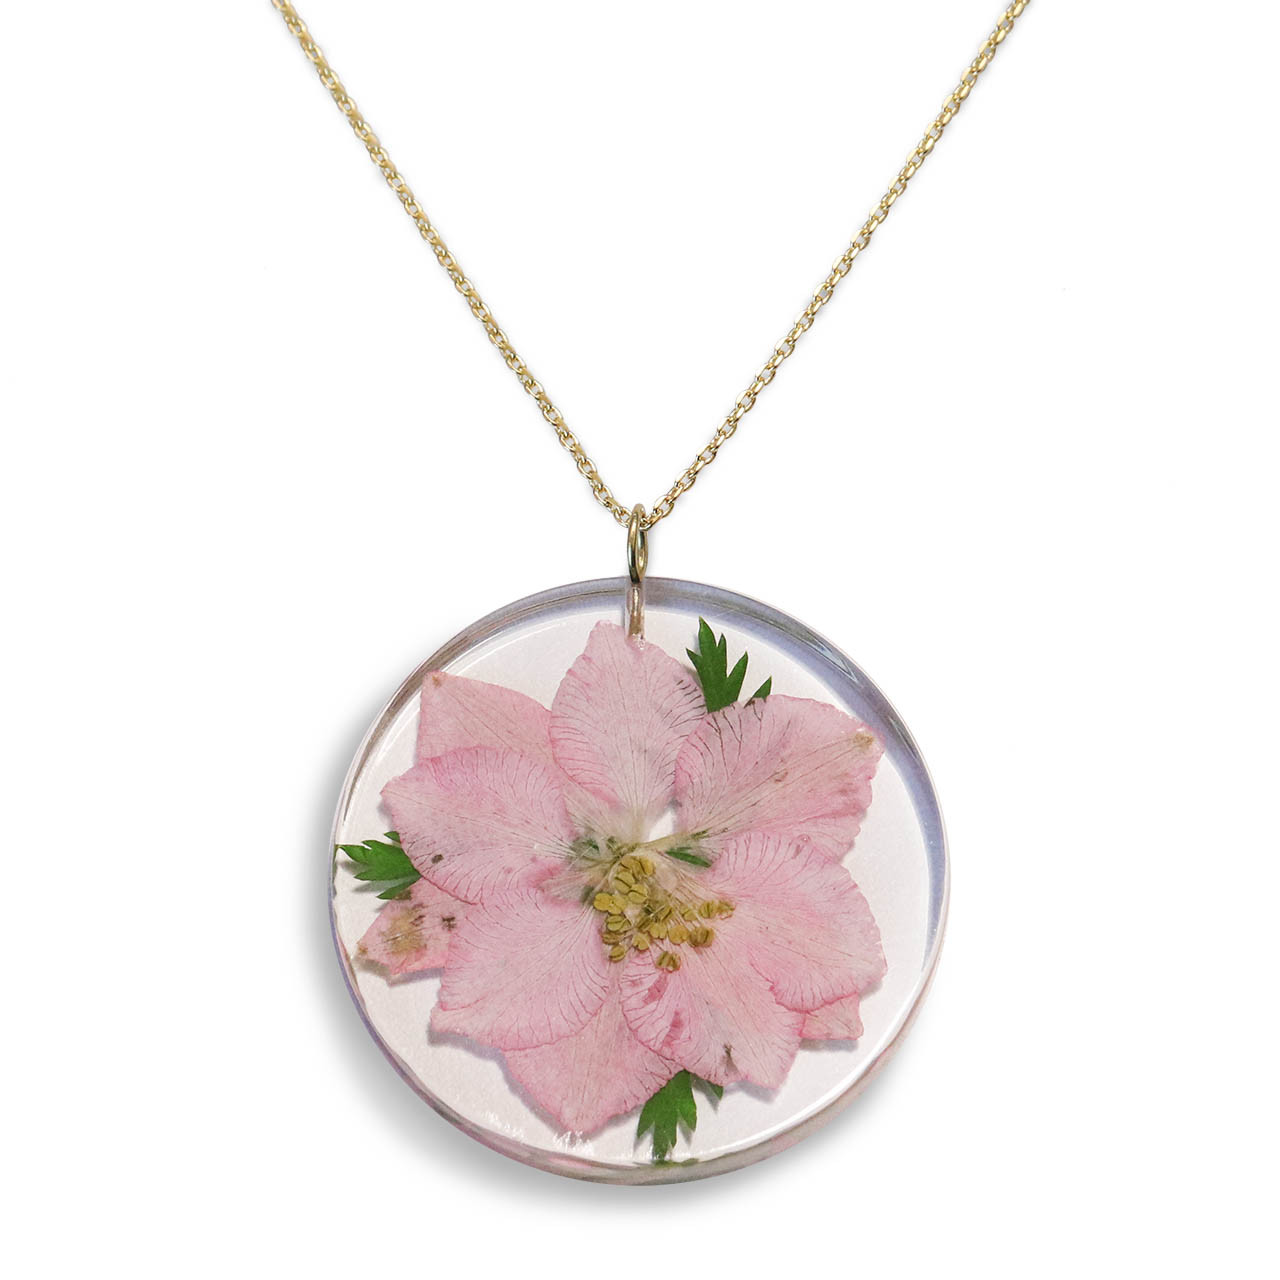 Cherry Petals Full Moon Necklace - Detroit Institute of Arts Museum Shop